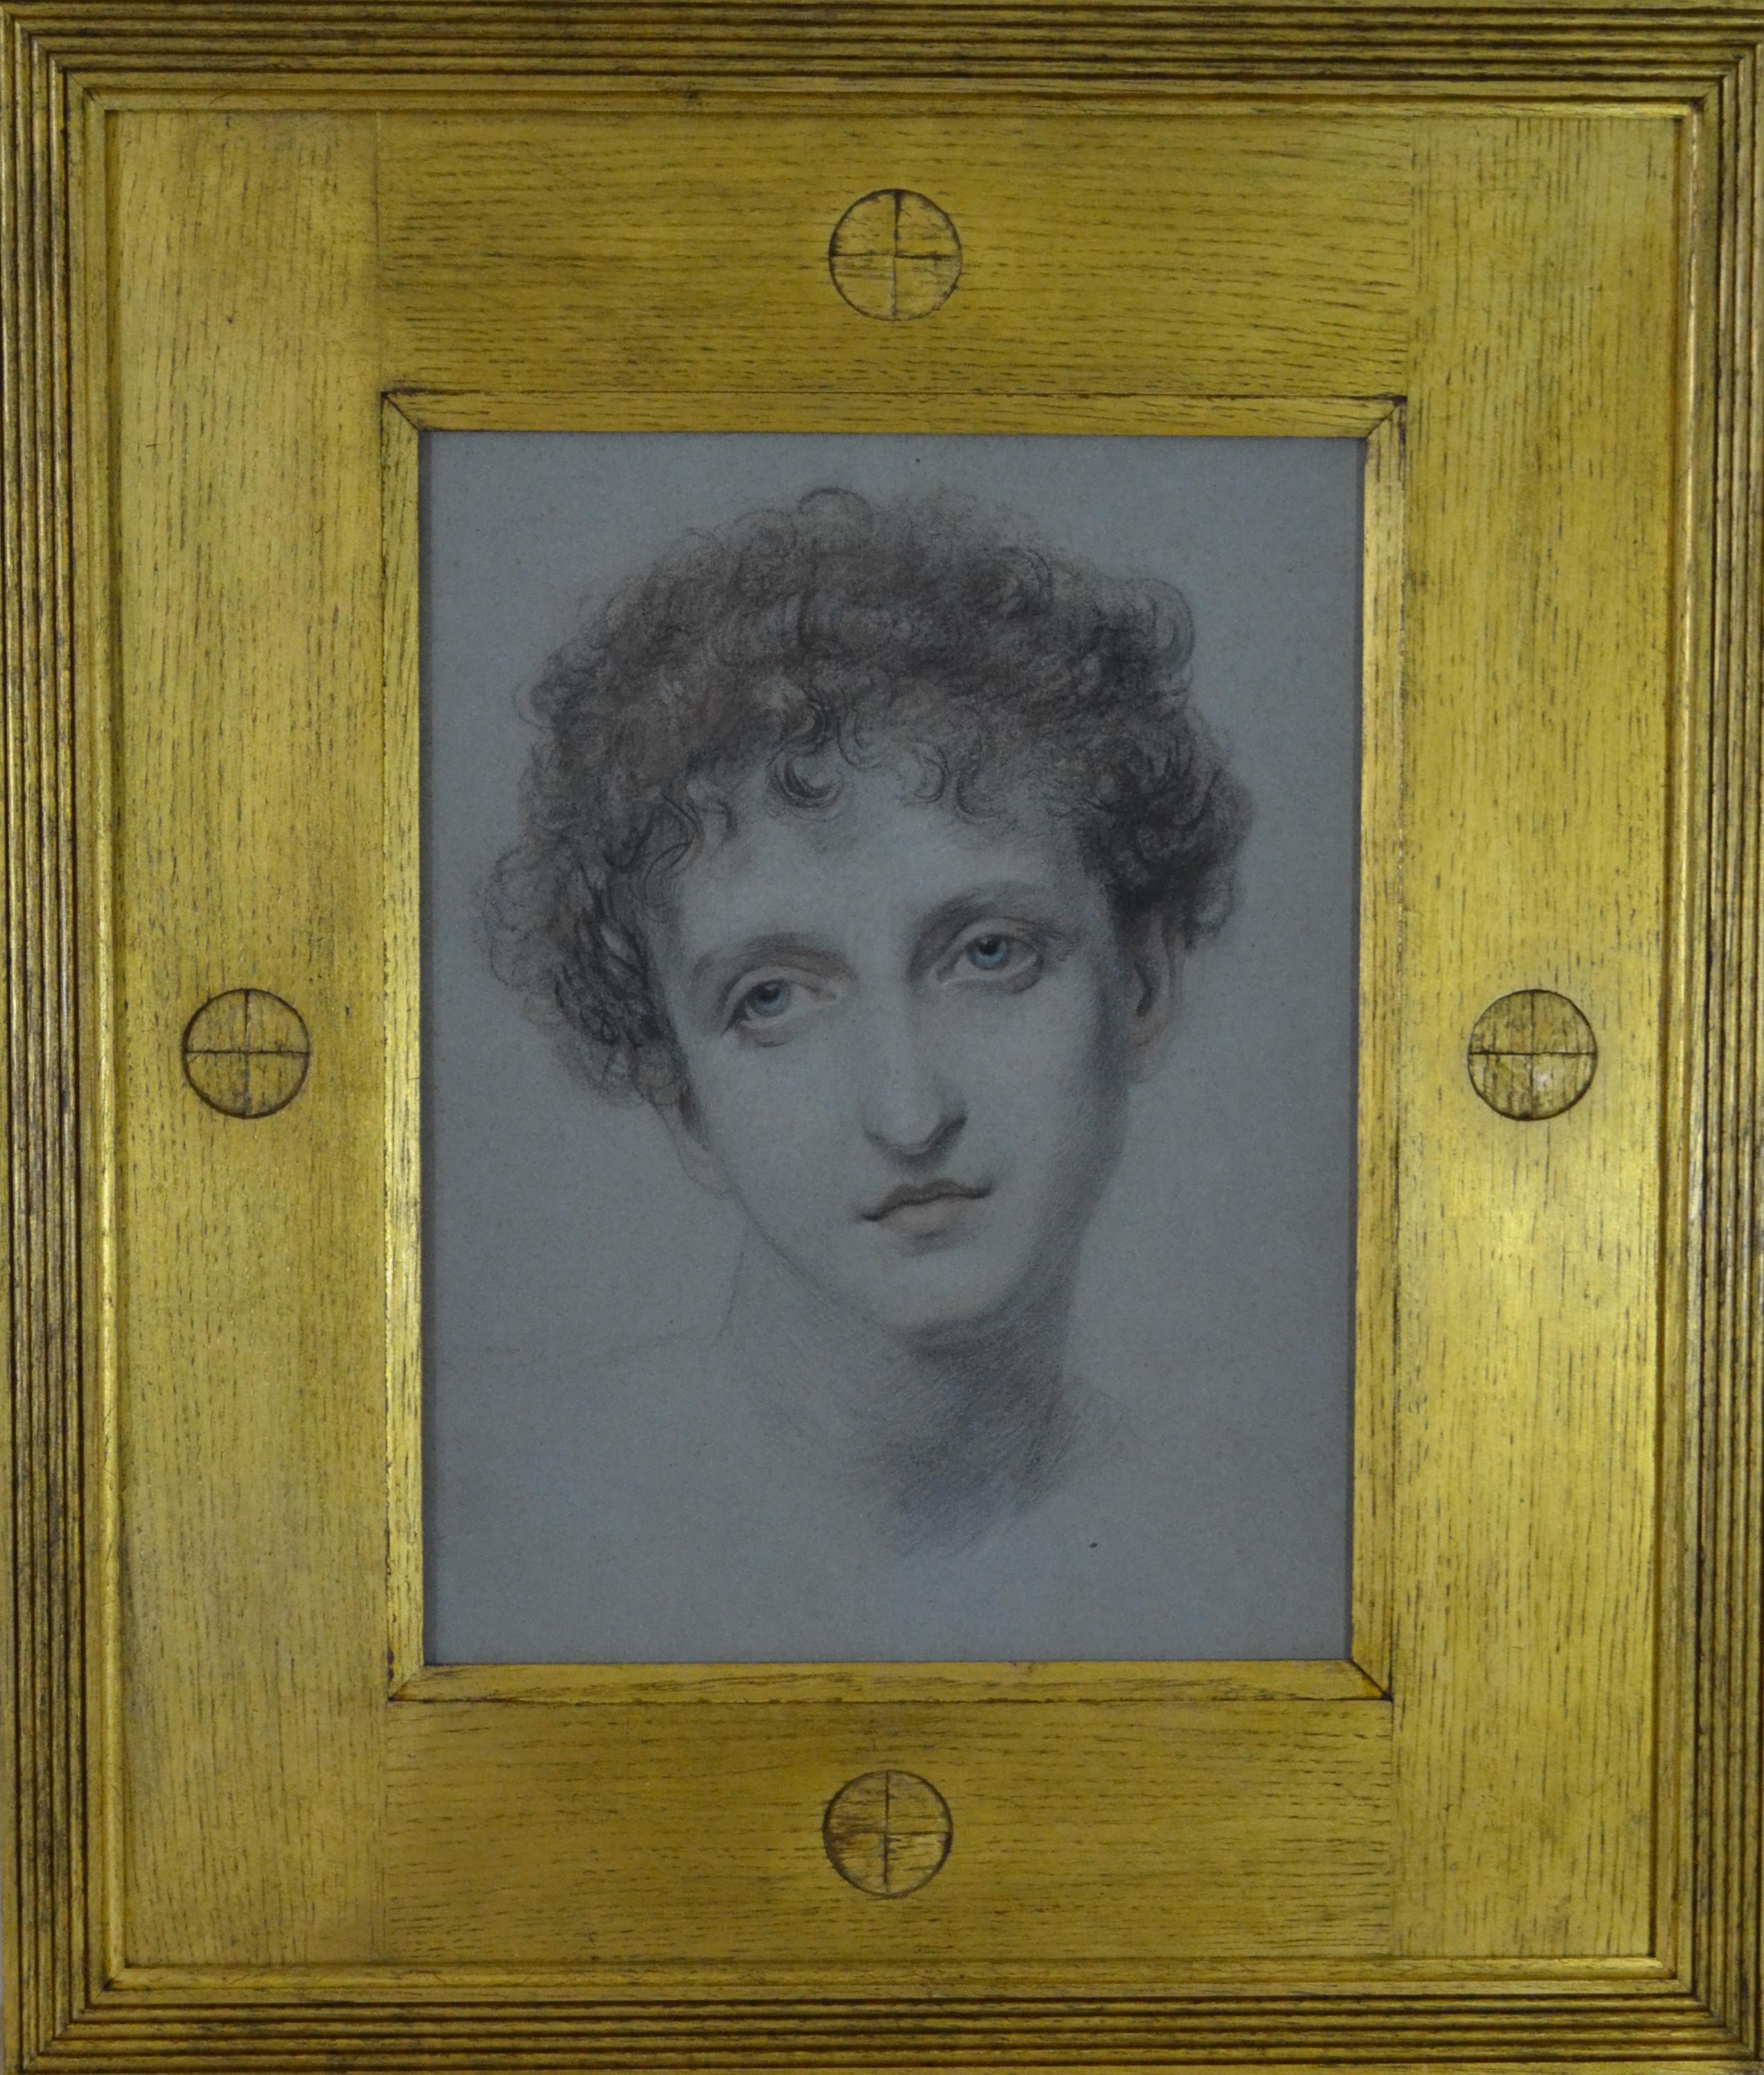 Ellen, A Greek Model - PreRaphaelite chalk portrait drawing - Art by Frederic James Shields, ARWS